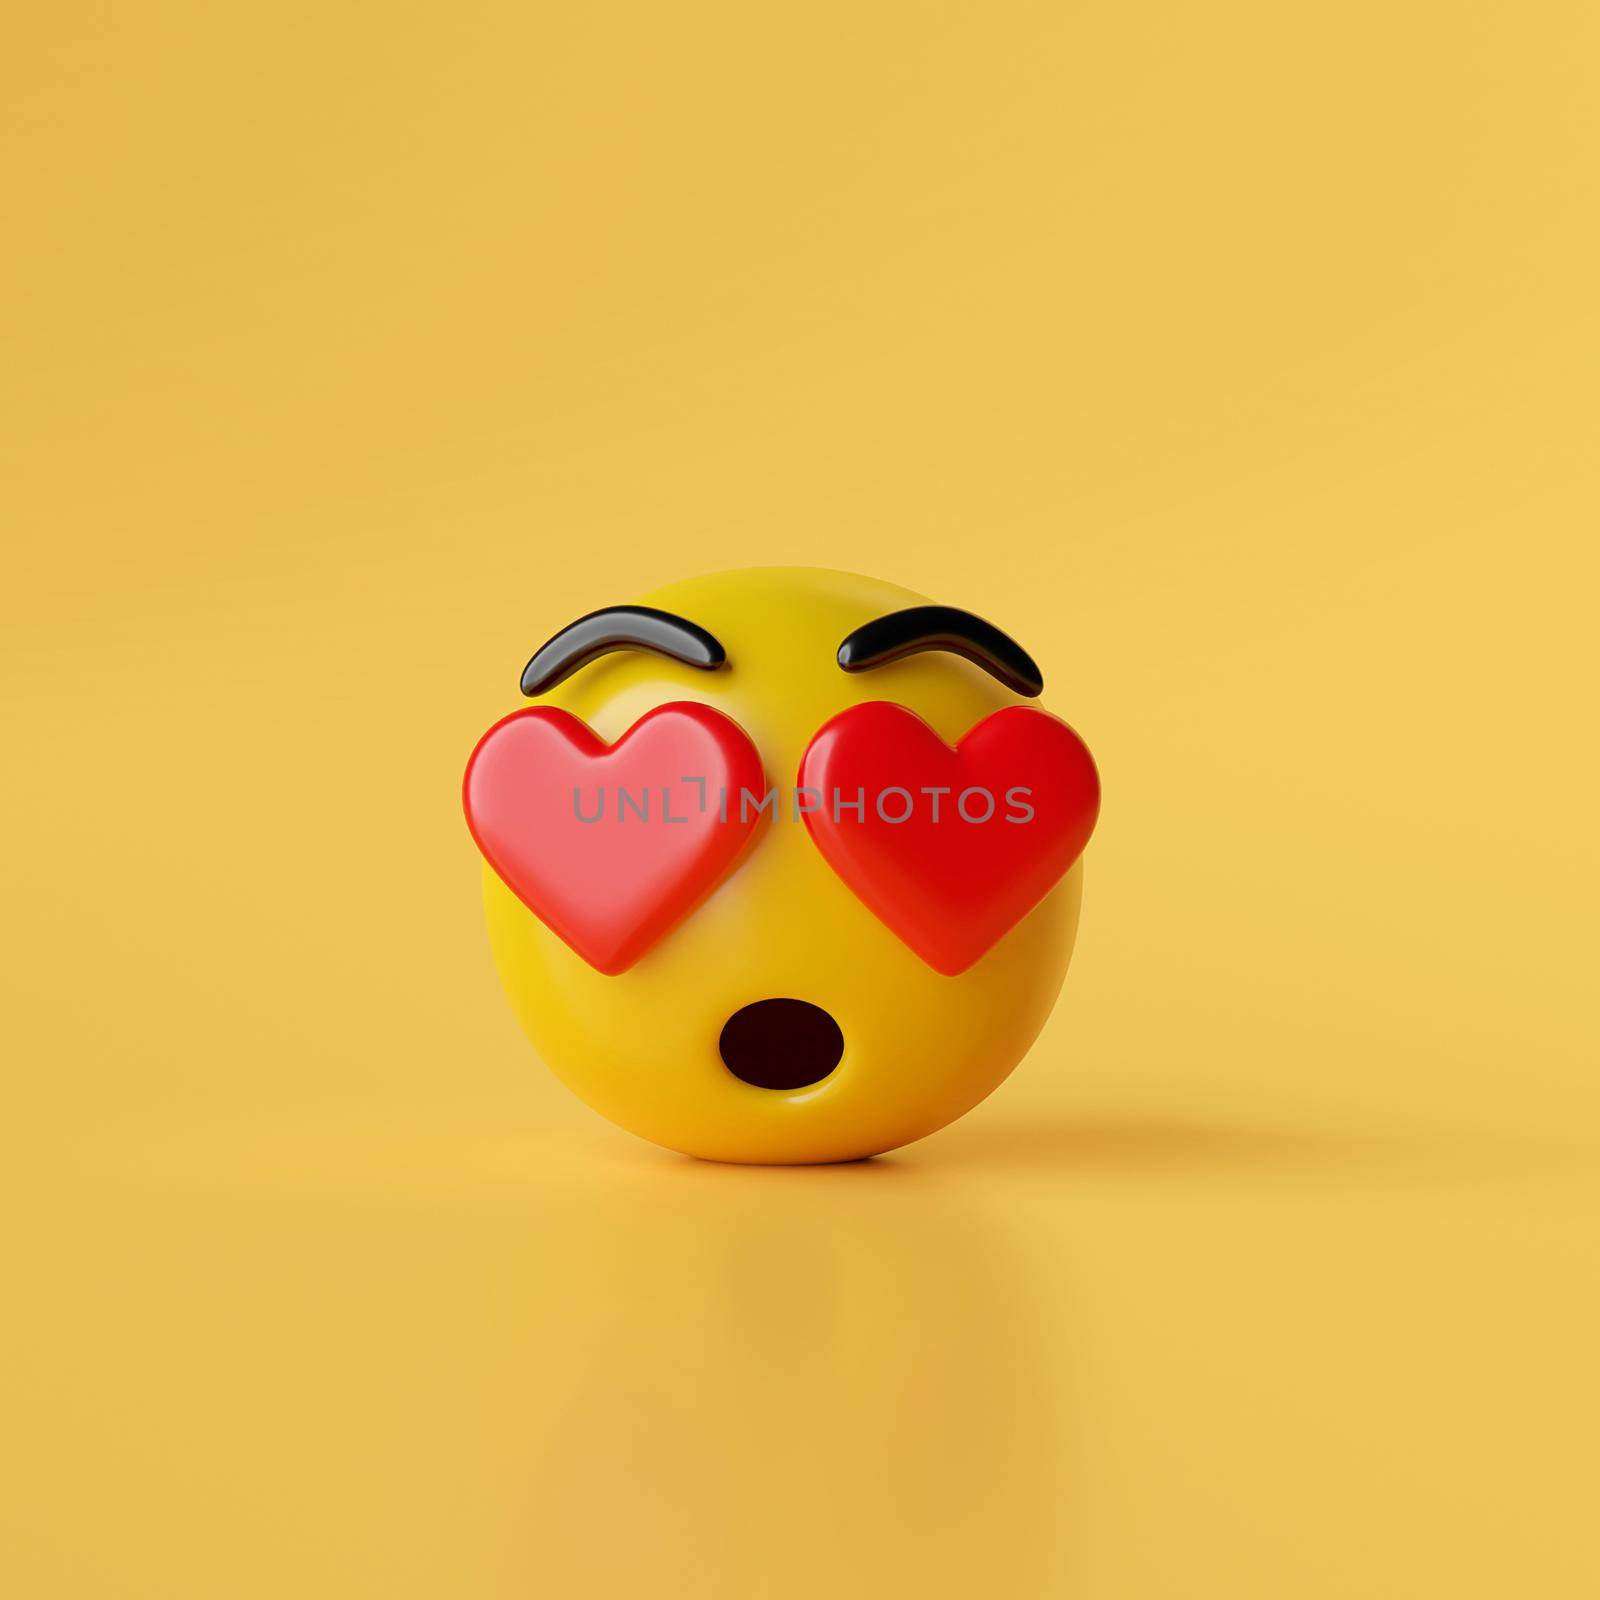 Fall in love emoji icons on yellow background, 3d illustration by nutzchotwarut